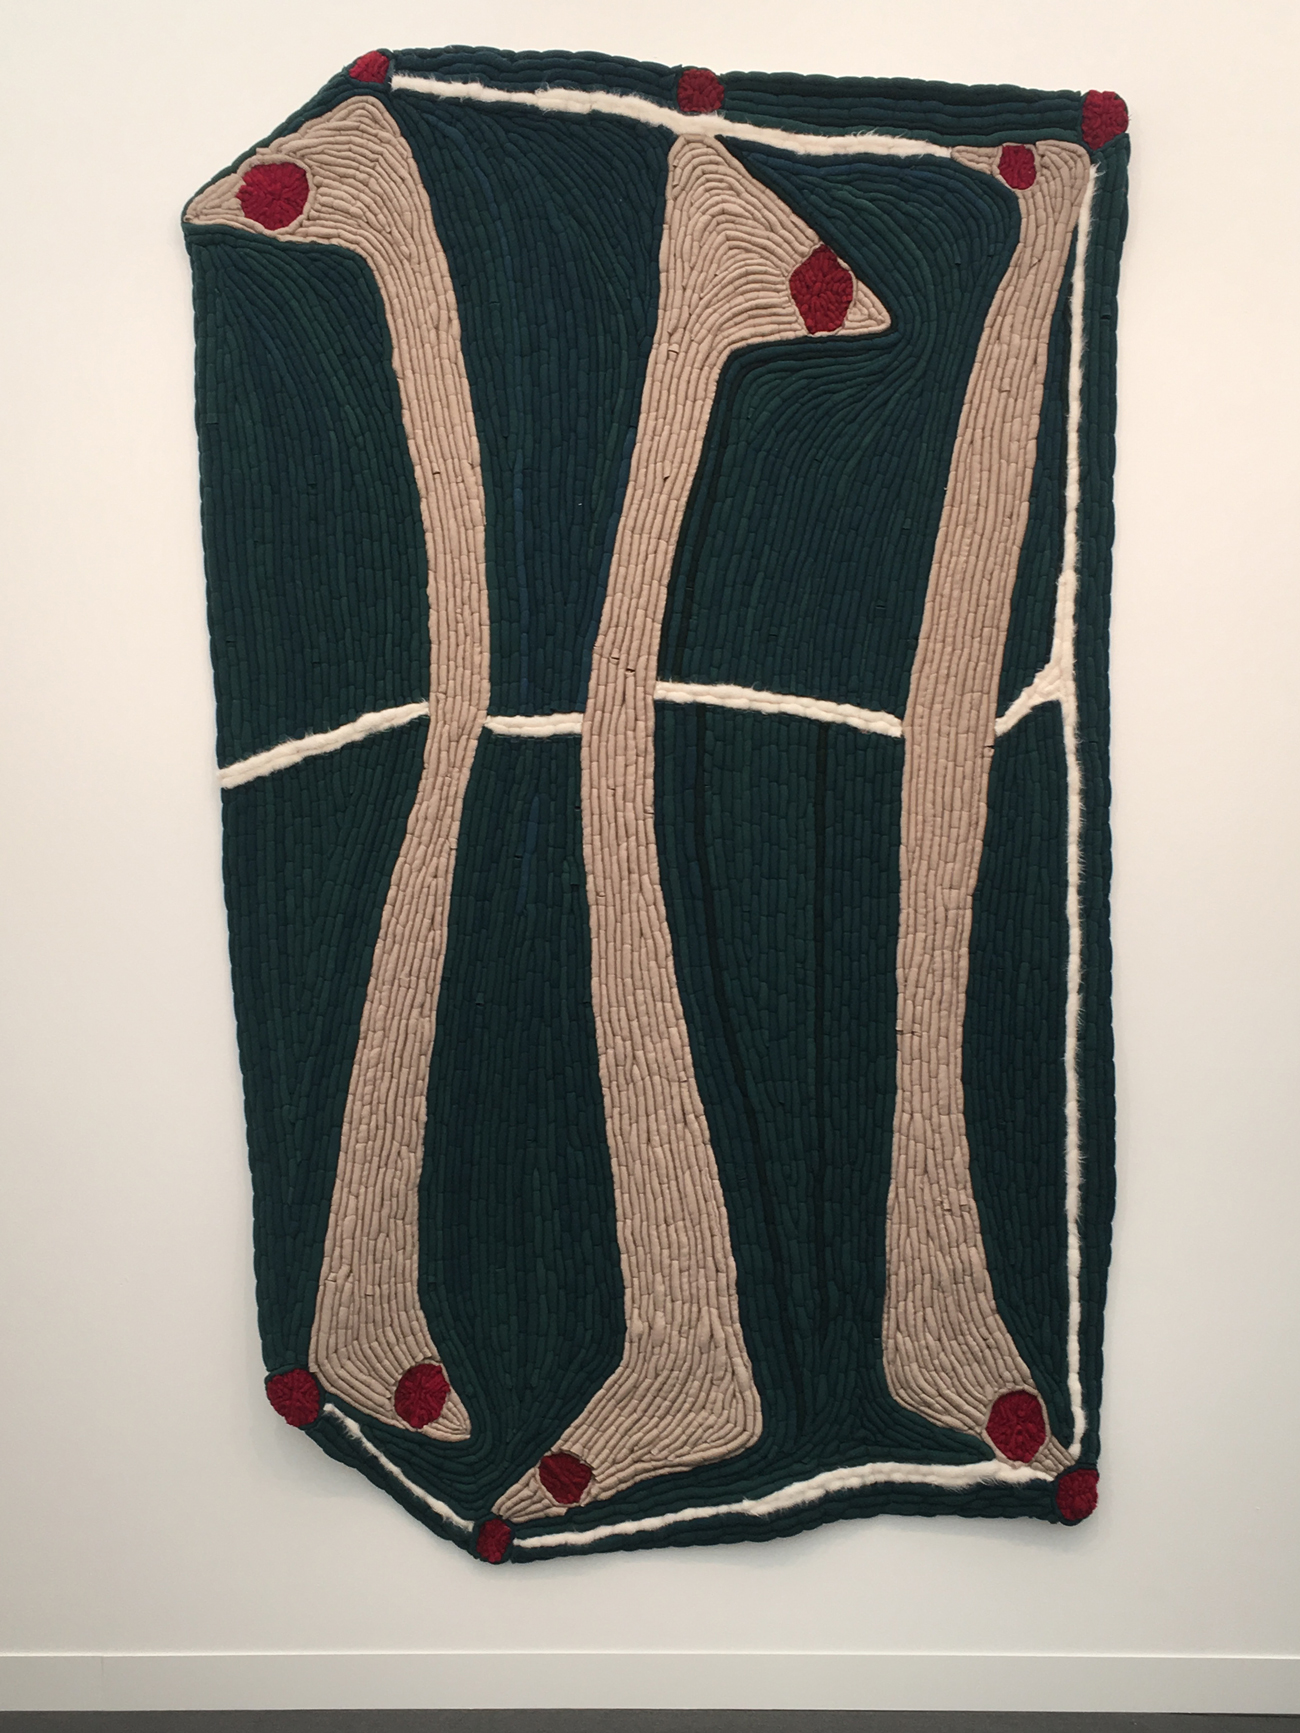 Enrico David, ”Untitled”, wool on cotton, 280 x 190 cm